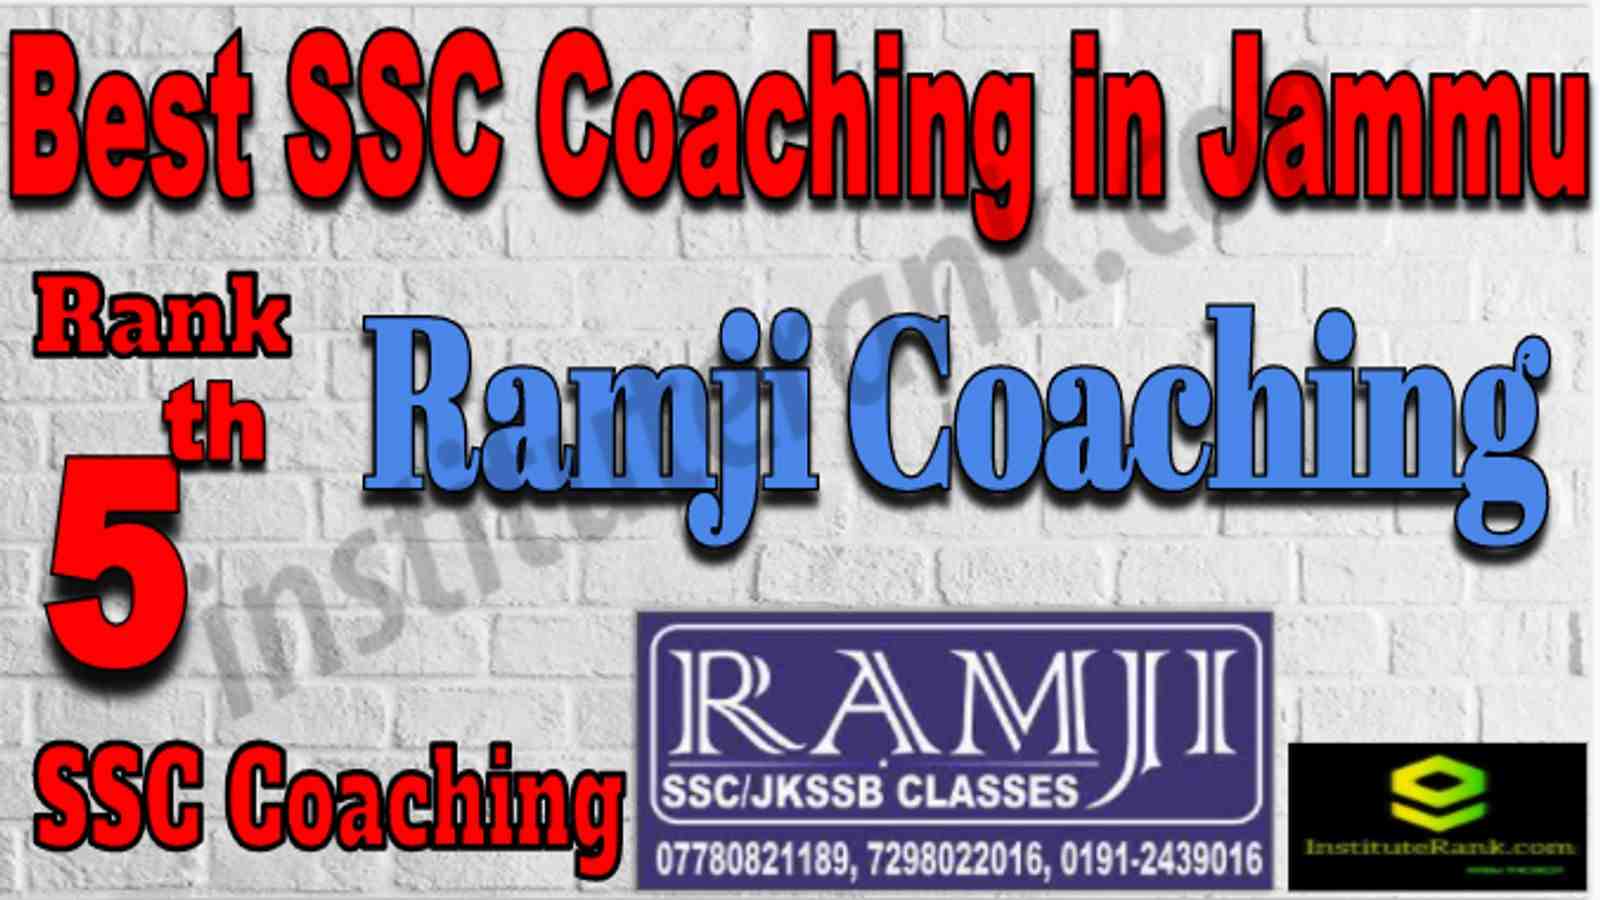 Rank 5 Best SSC Coaching in Jammu